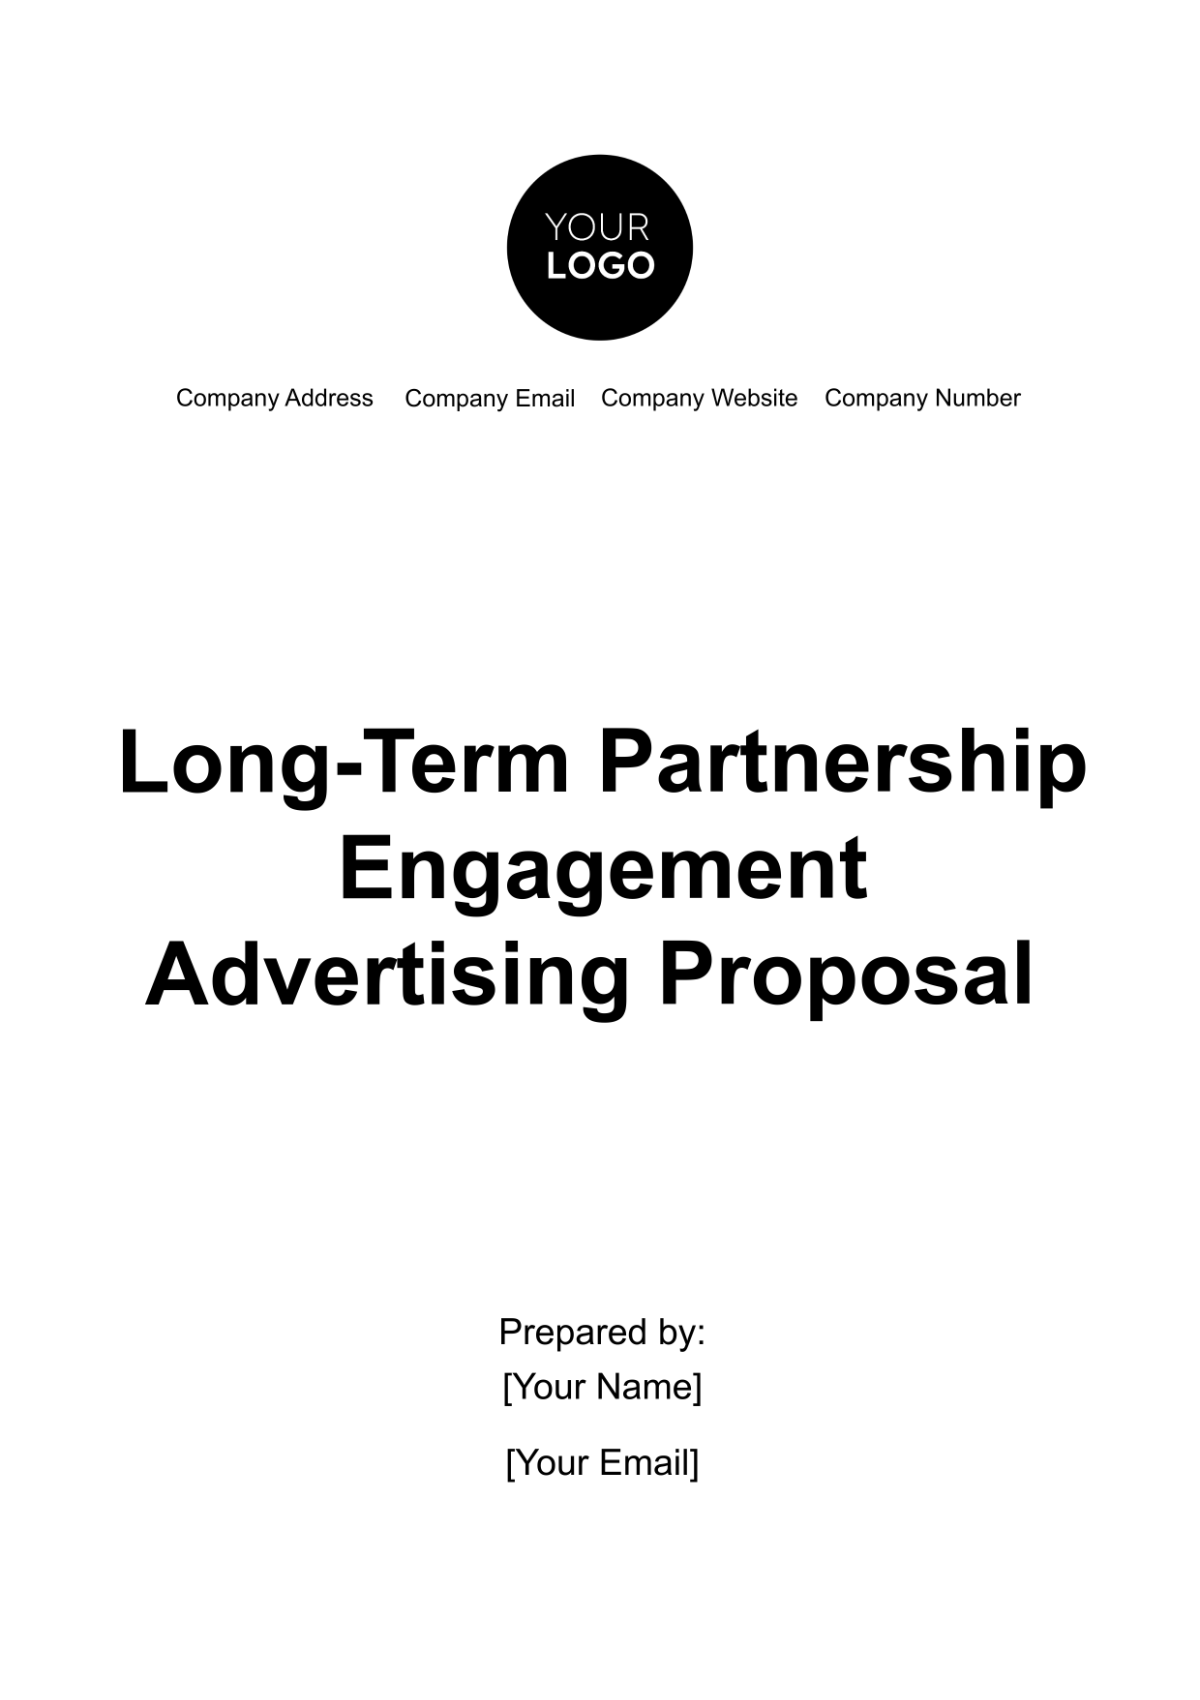 Long-Term Partnership Engagement Advertising Proposal Template